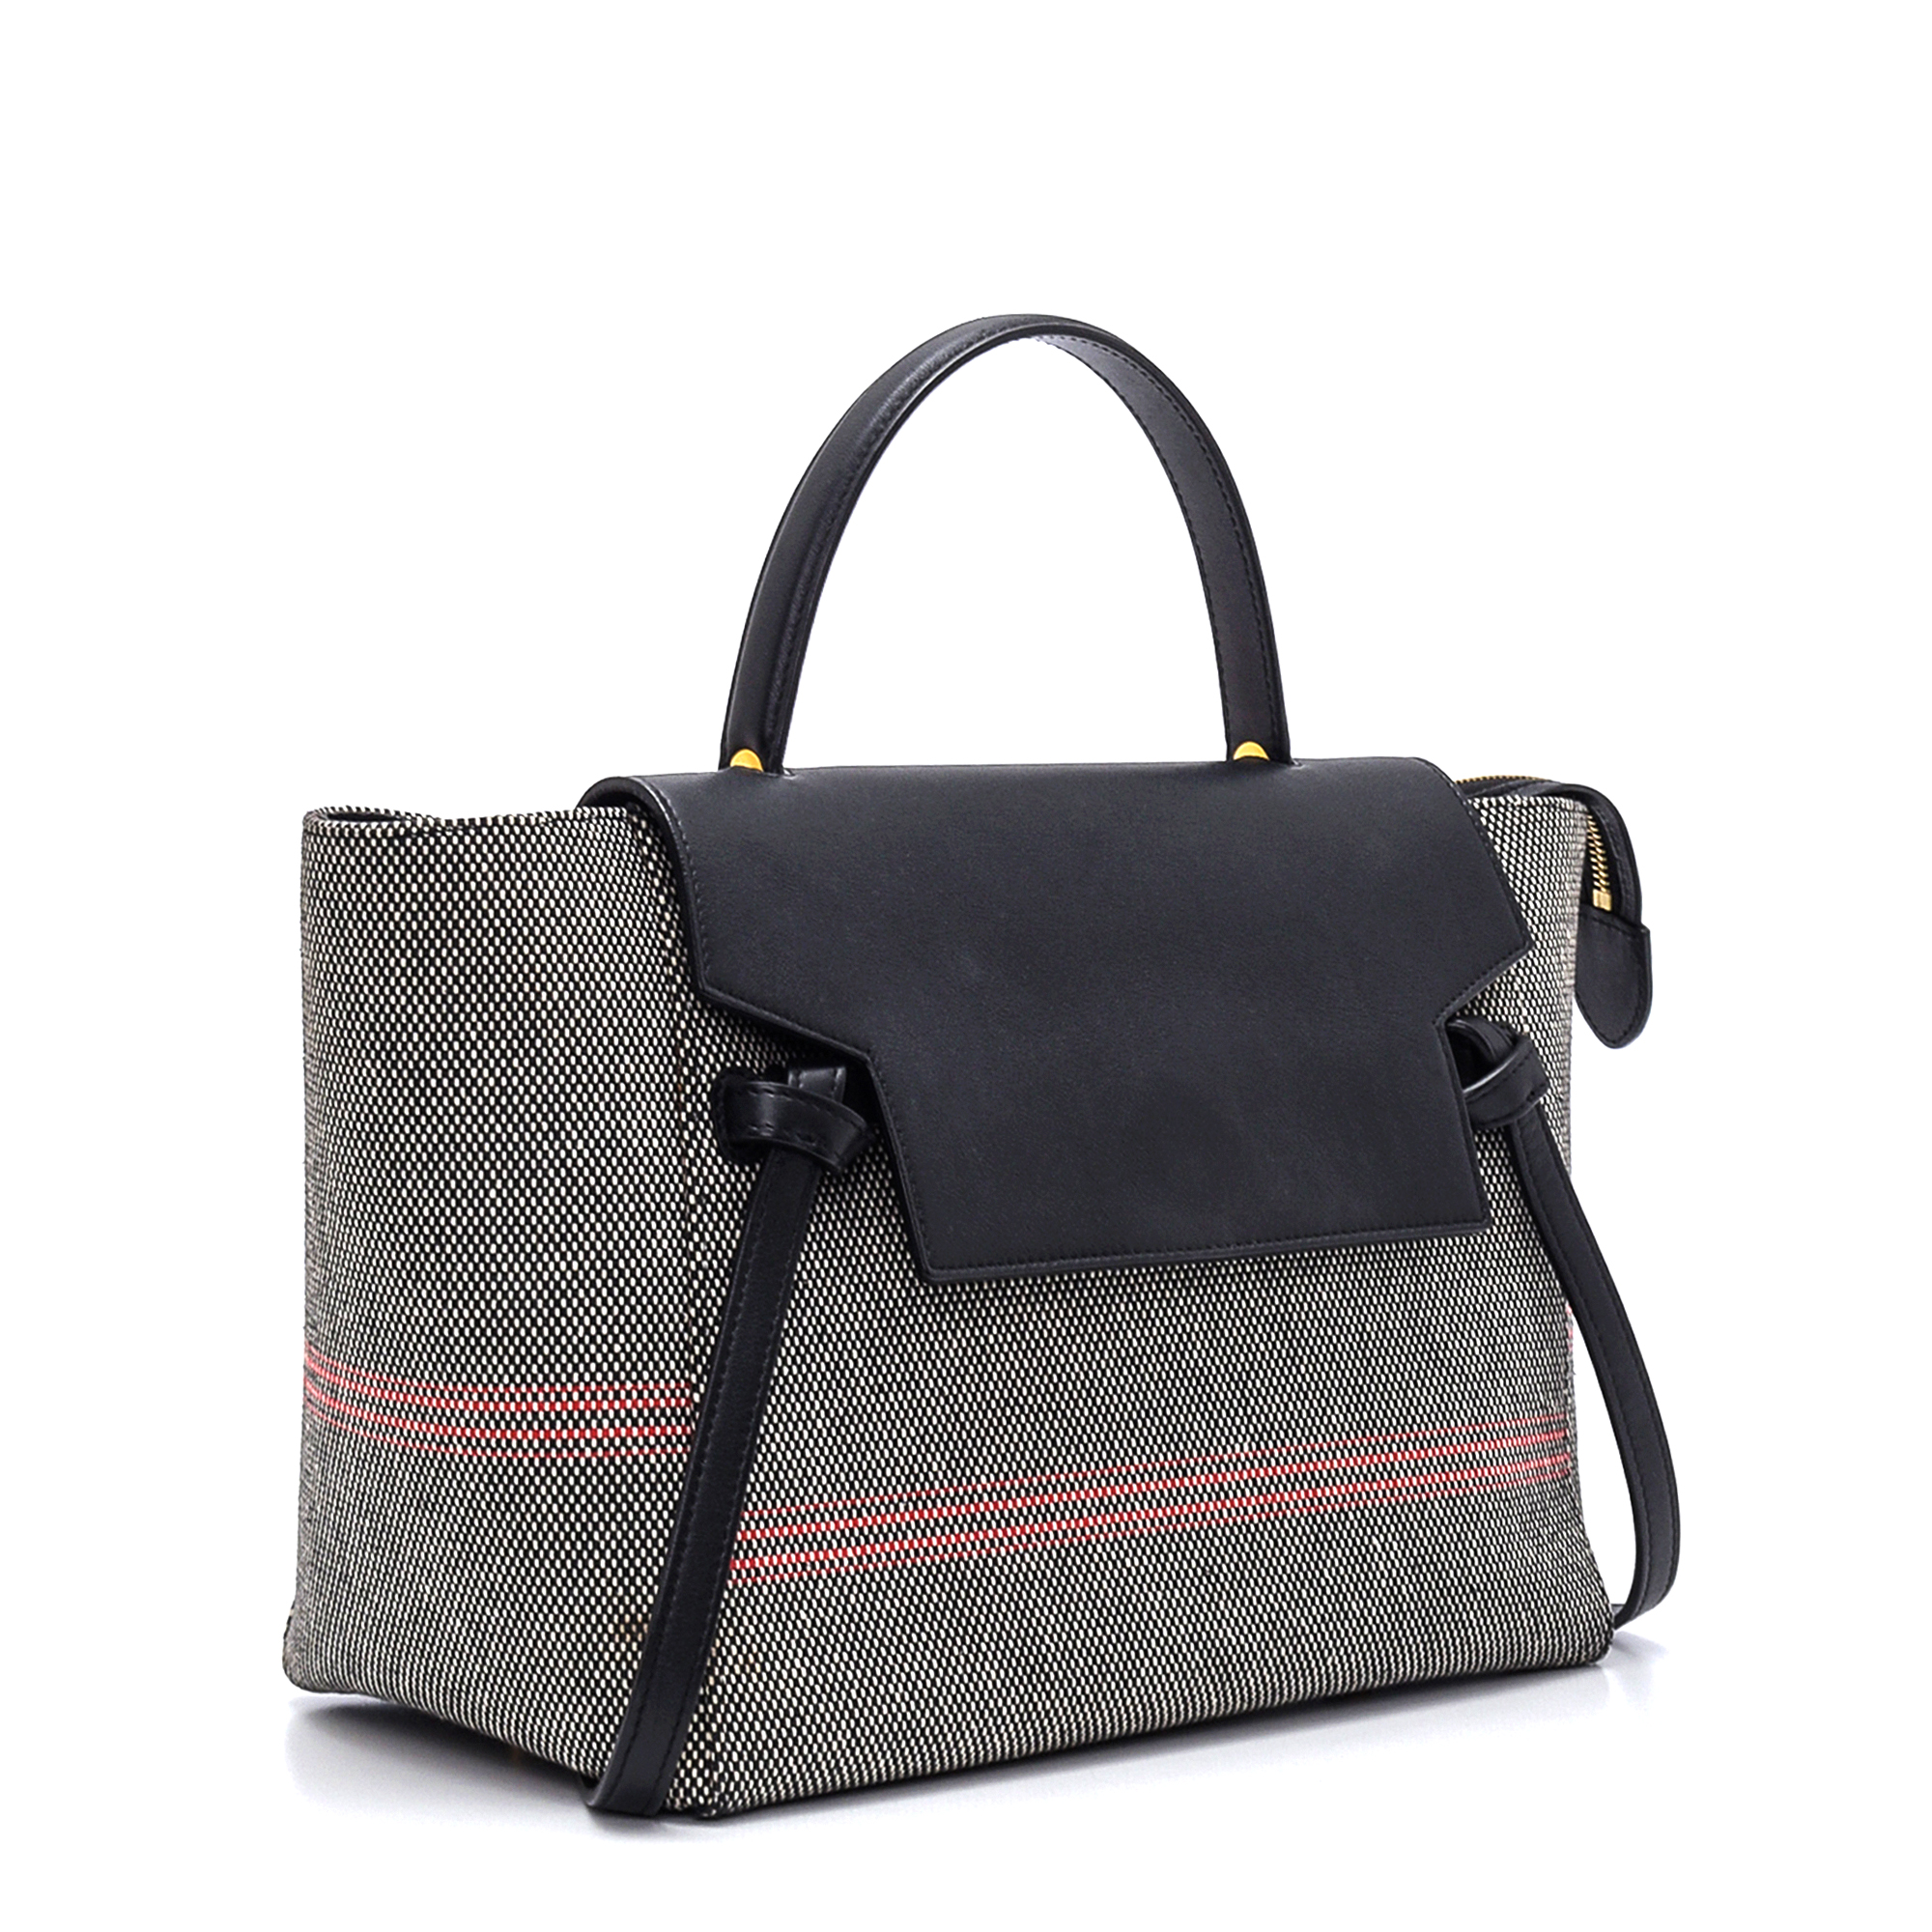 Celine - Black / White Striped Canvas and Leather Medium Belt Bag